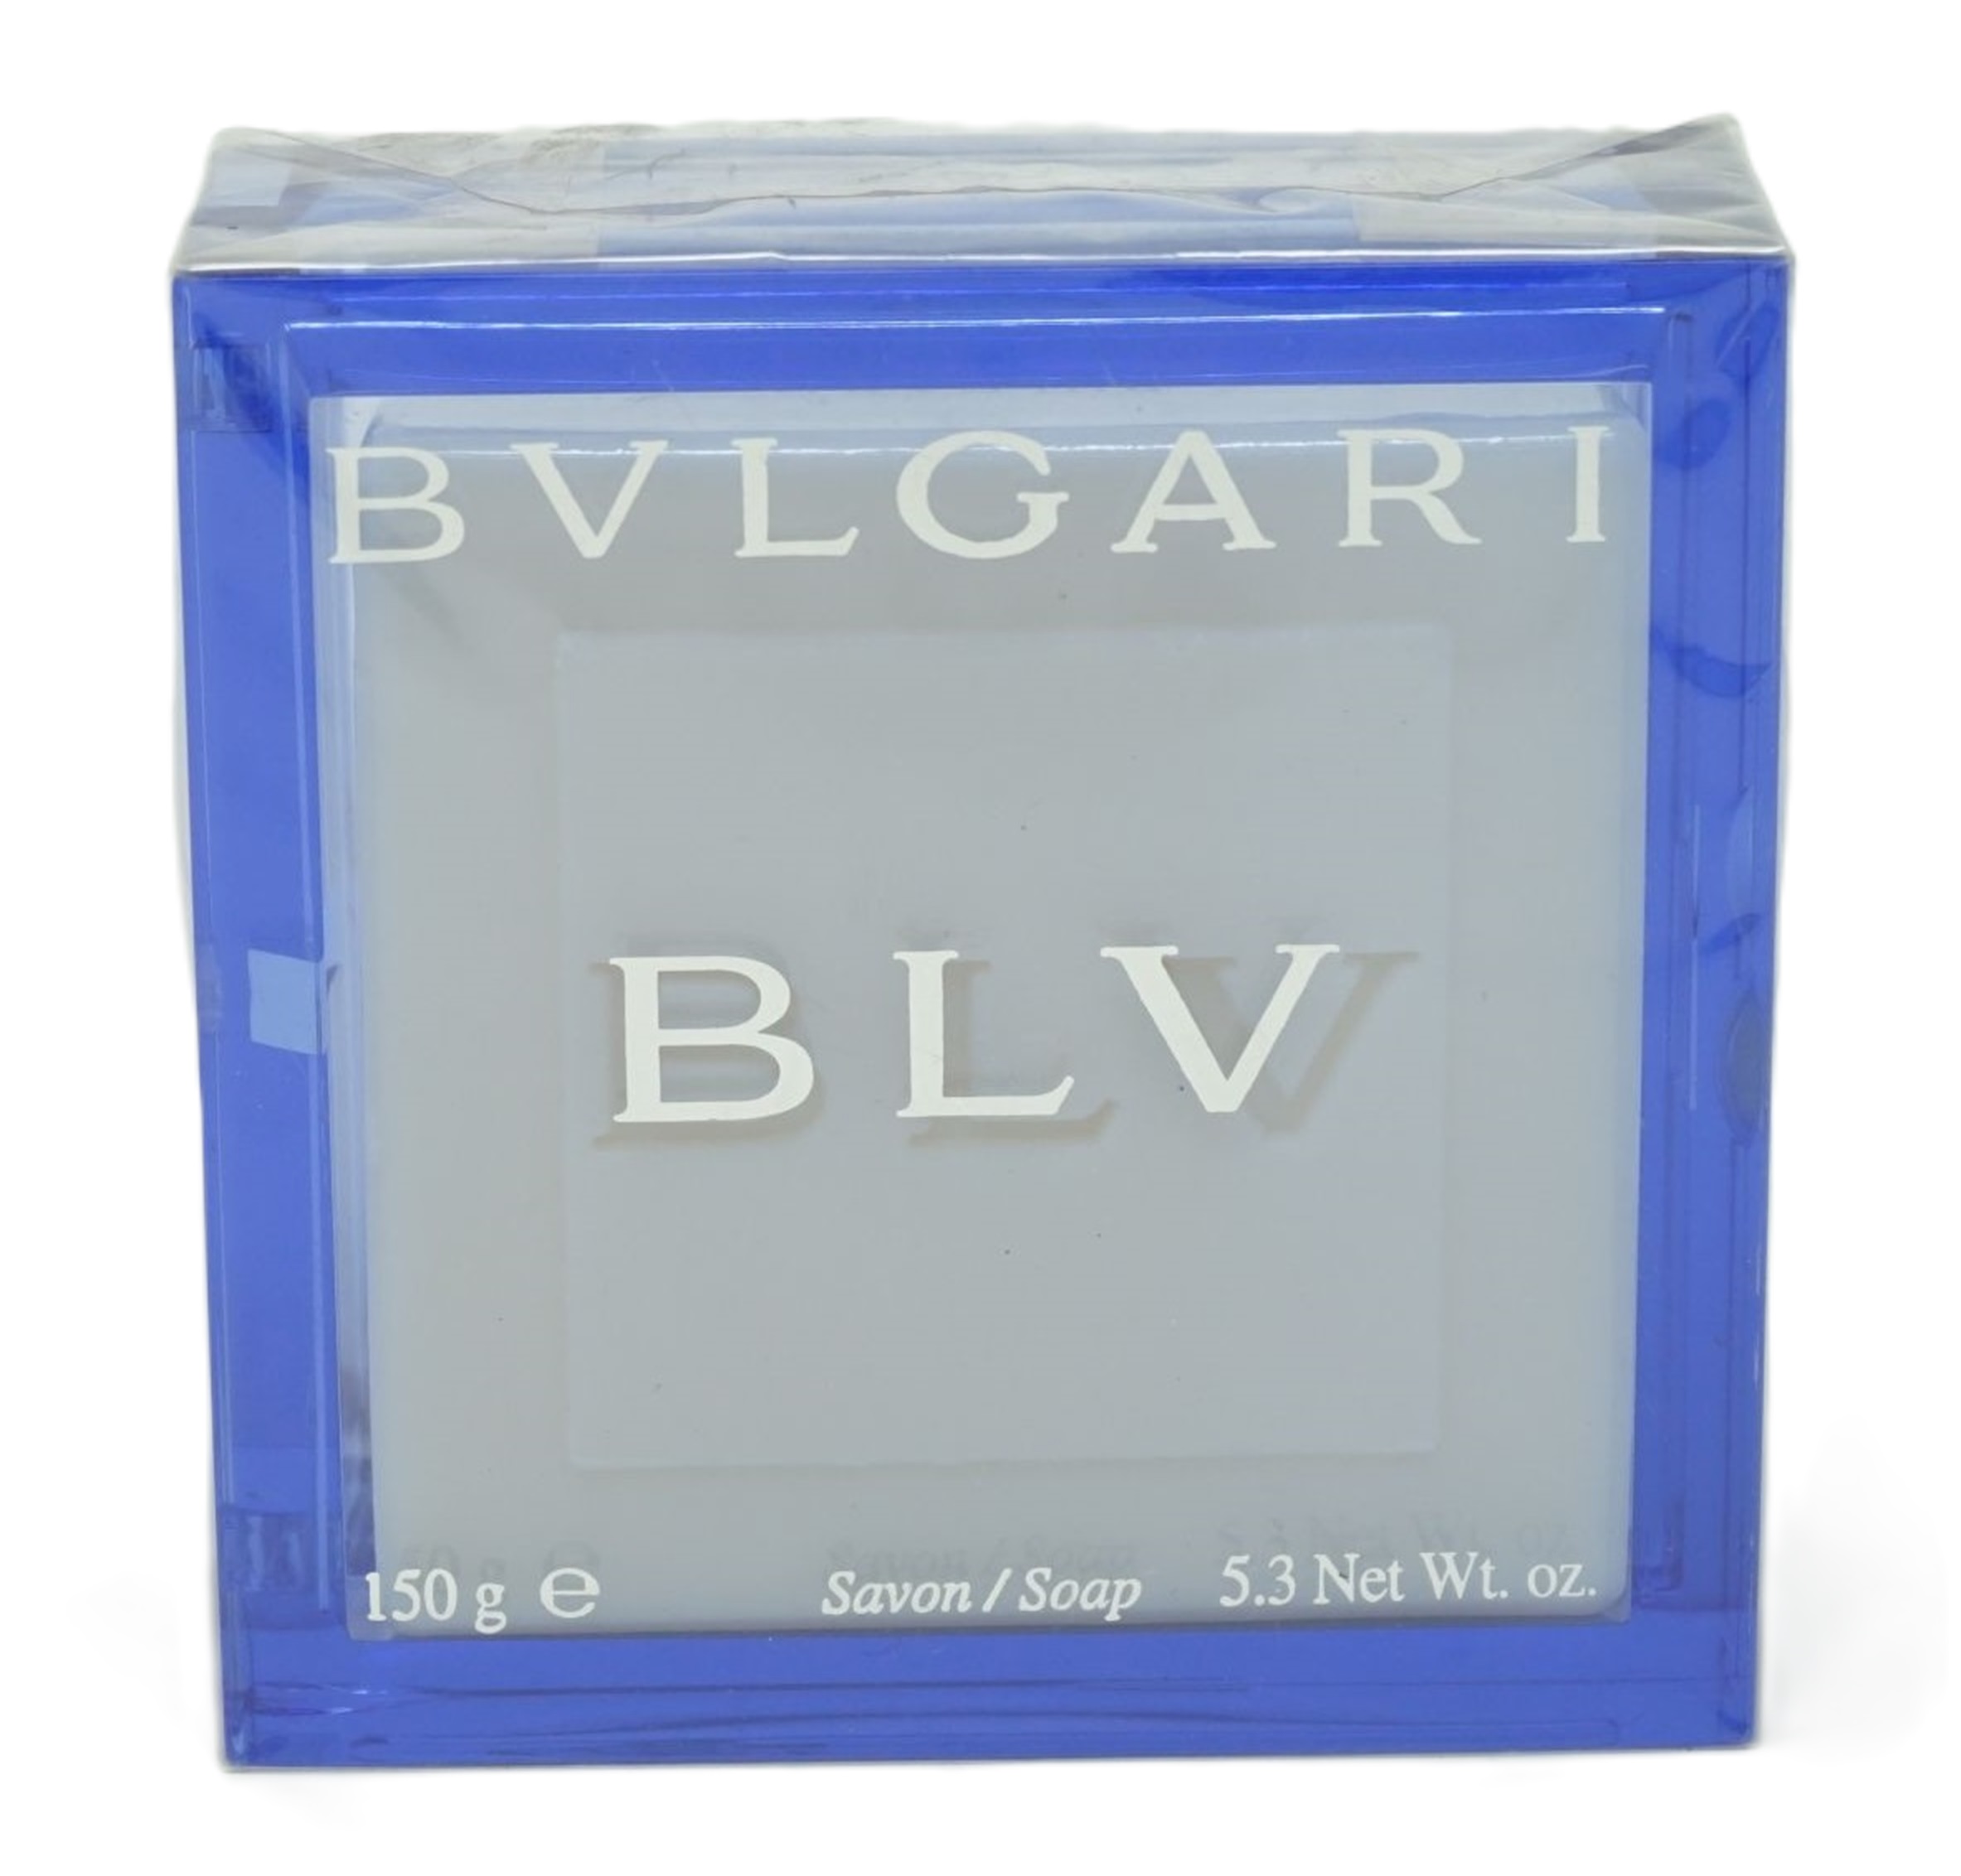 Bvlgari BLV Seife Soap 150g